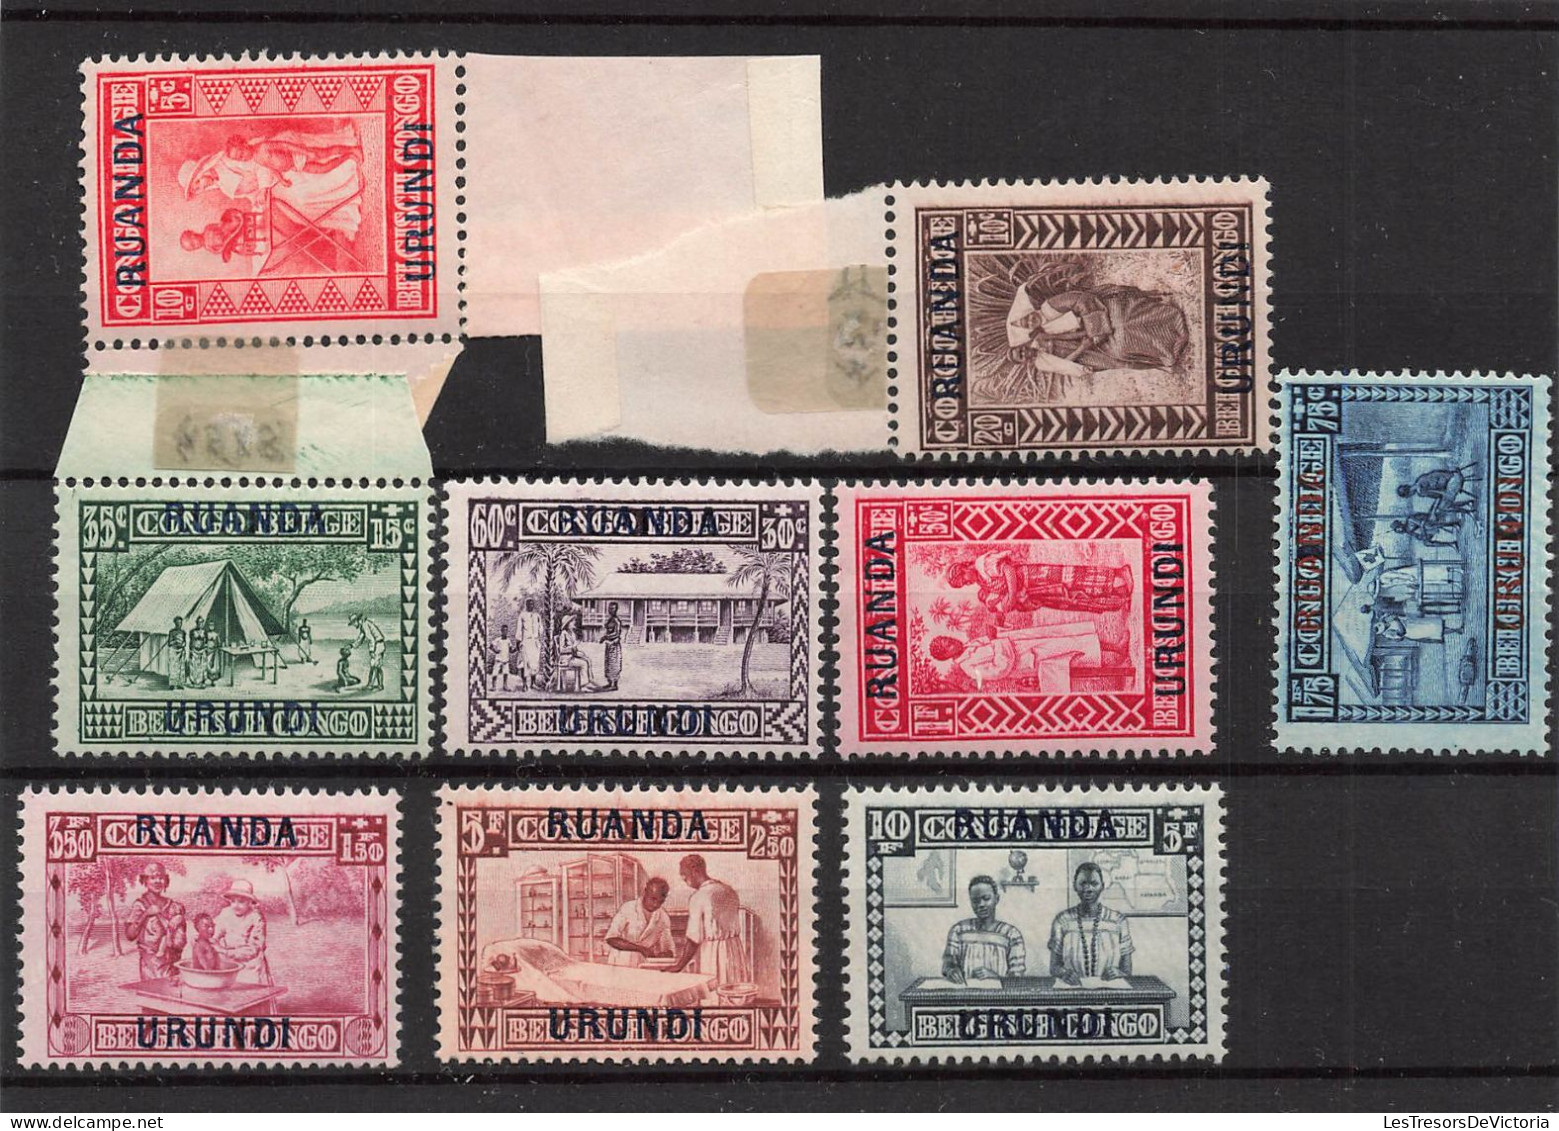 Timbres - Ruanda Urundi - 1930 - COB 81/89*Goutte De Lait Surchargé - Cote75 - Ongebruikt